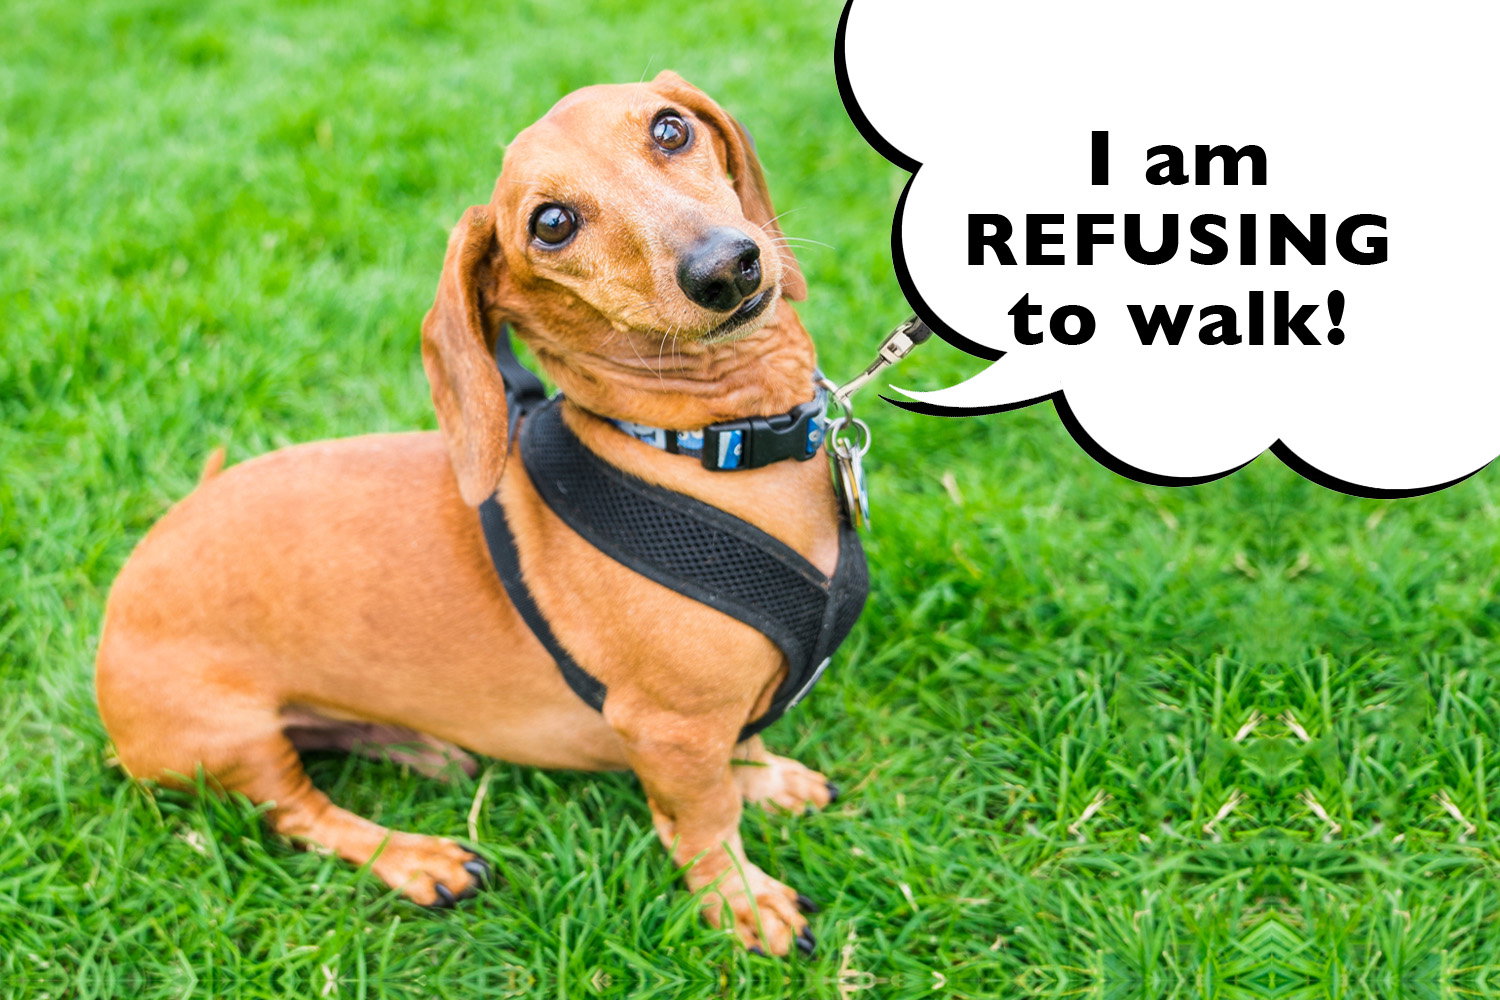 can dachshunds go off leash